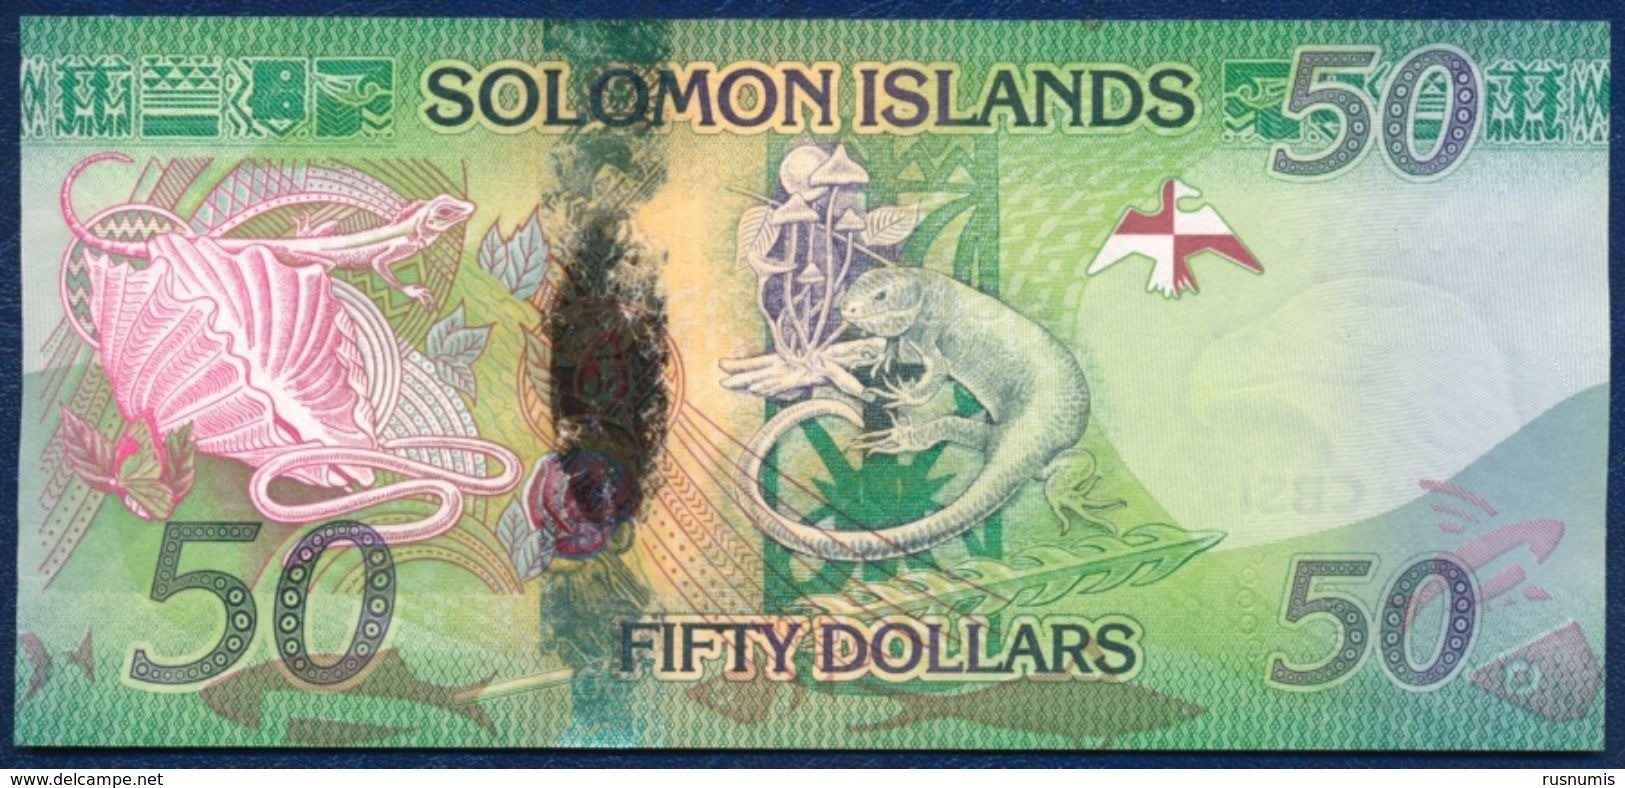 SOLOMON ISLANDS 50 DOLLARS P-35a LIZARD 2013 UNC - Solomon Islands